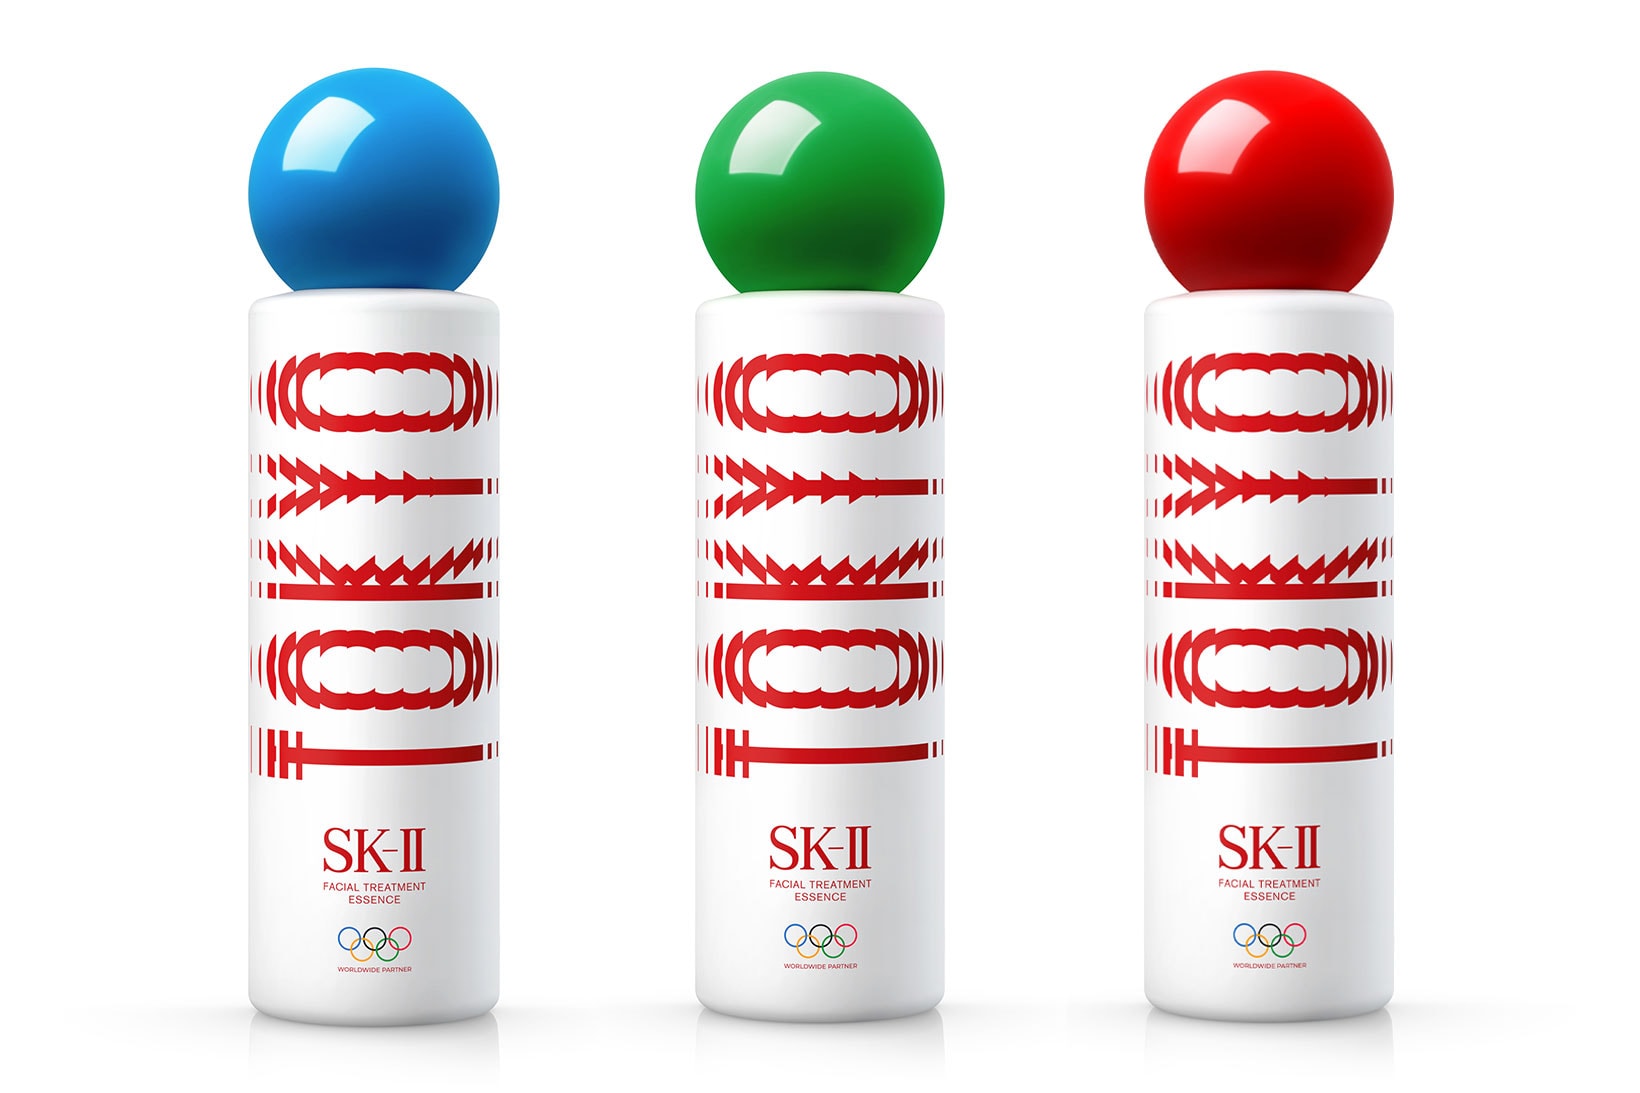 ski-ii fairy water facial treatment essence tokyo 2020 olympics limited edition bottle